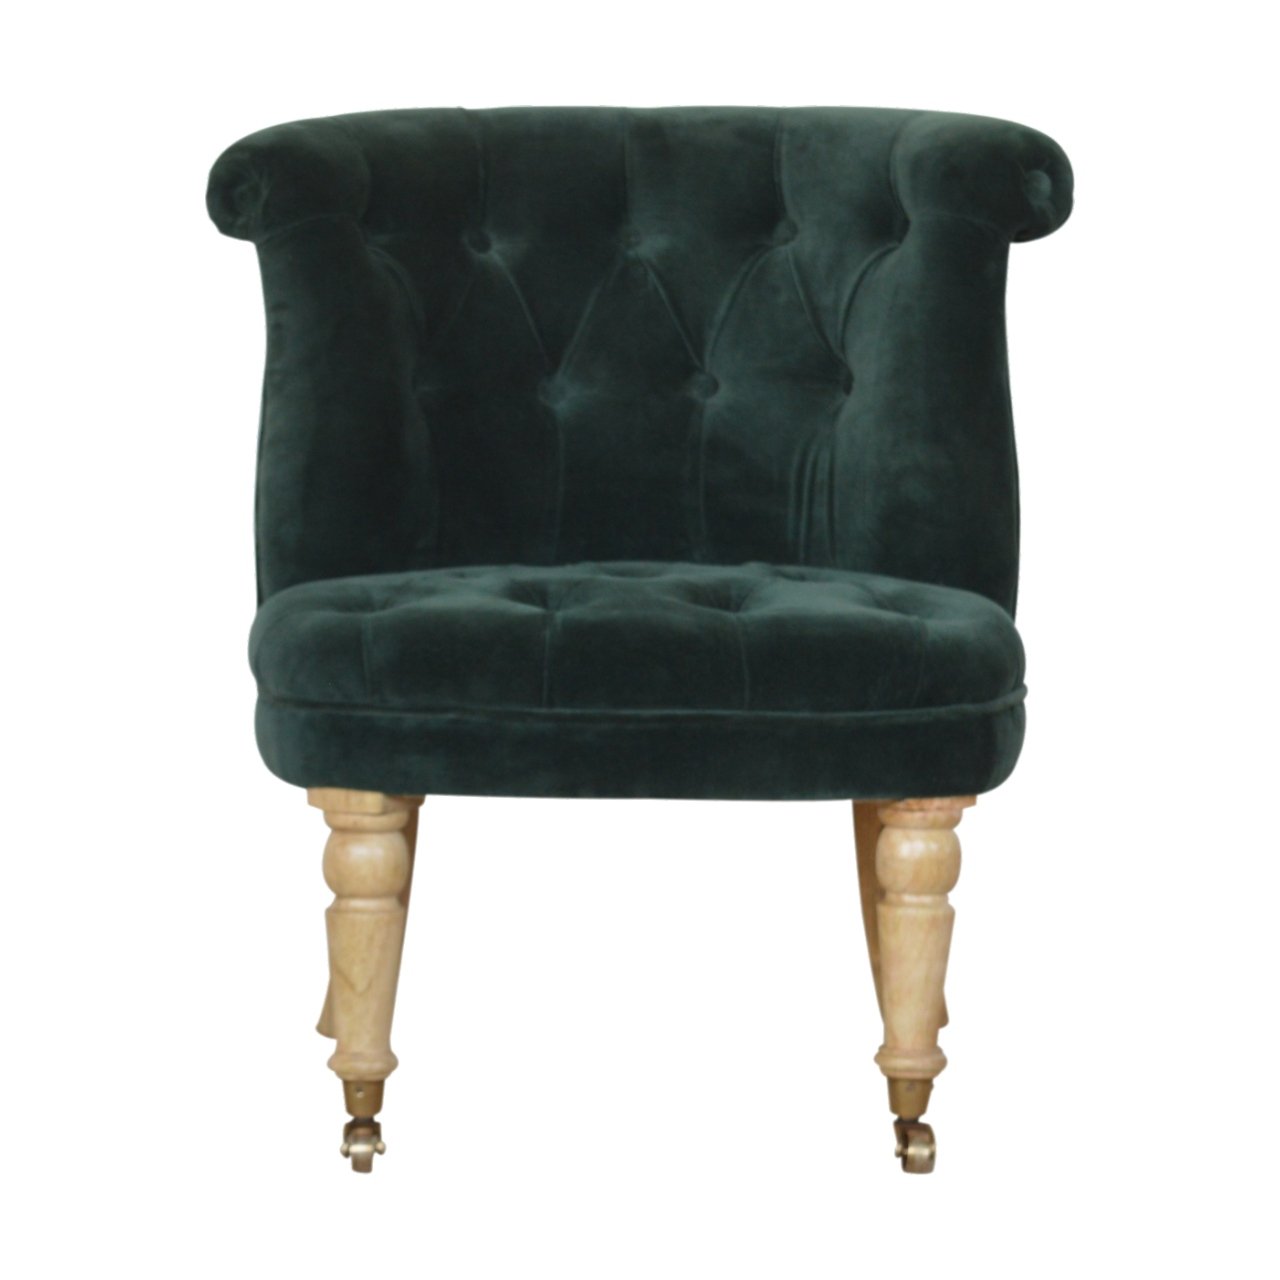 View Emerald Velvet Accent Chair information